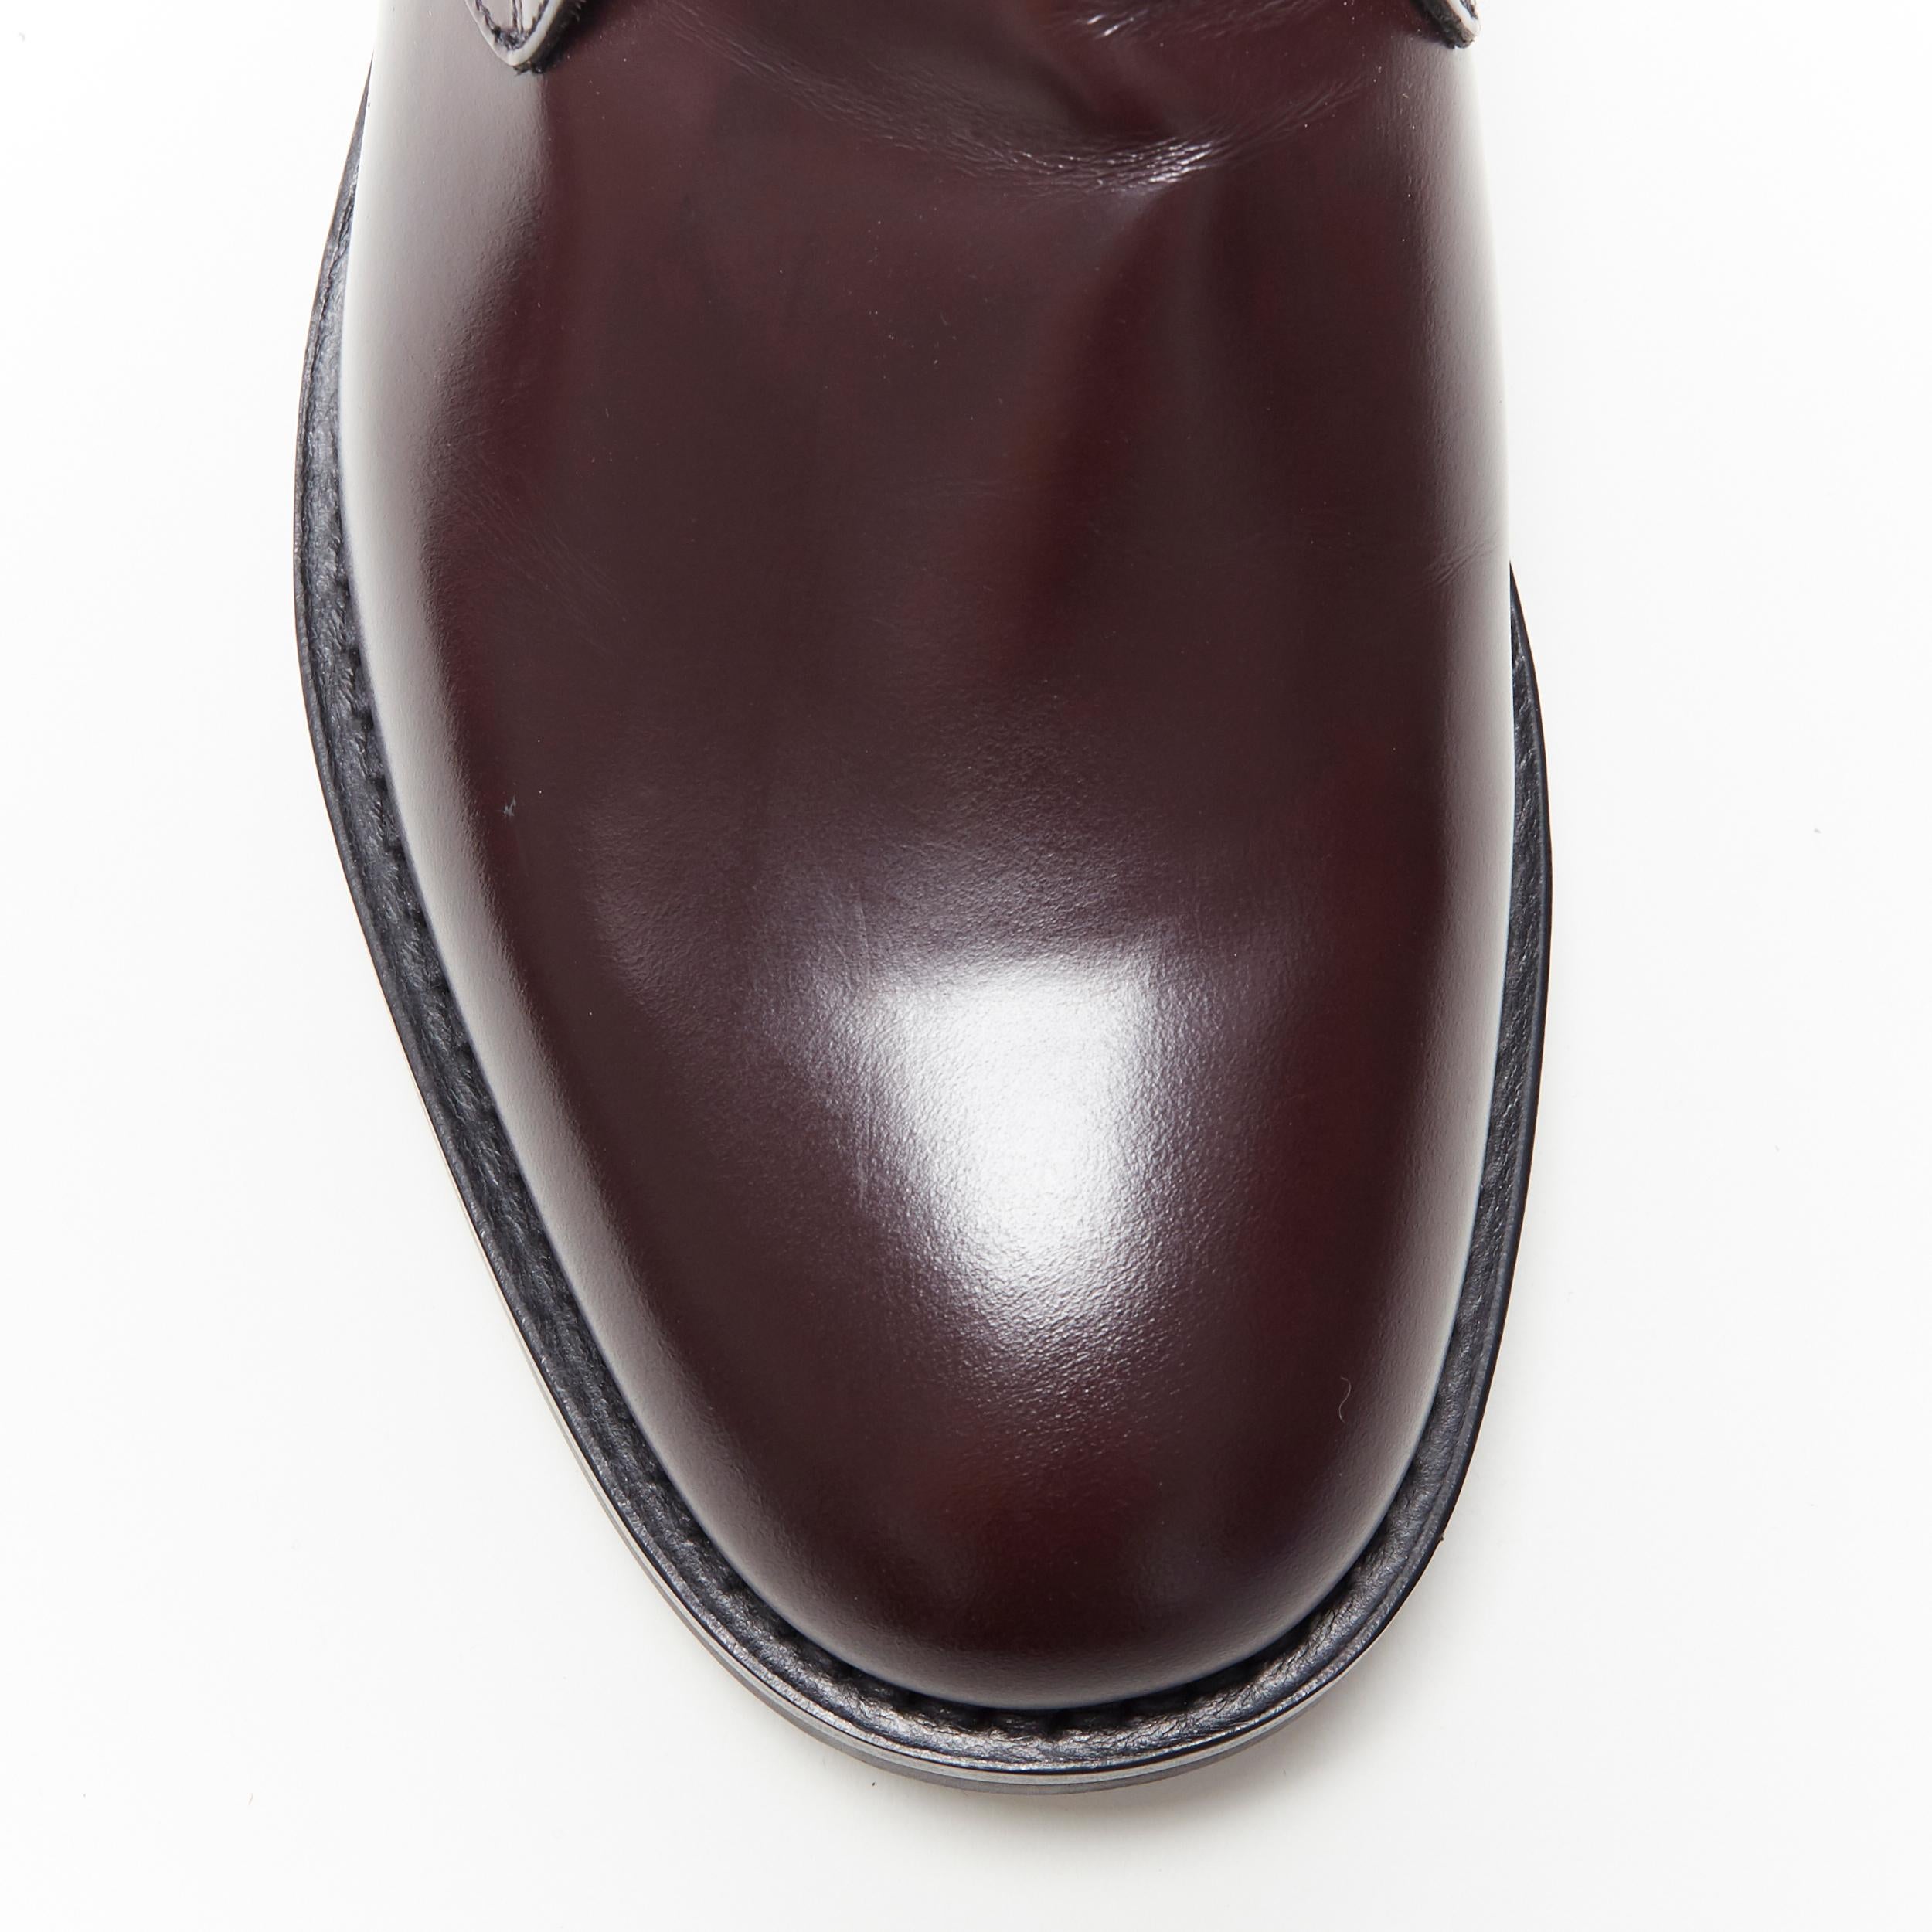 new CHURCHS Ryder 3 Burgundy Bright Calf polished leather chukka boots UK11 US12 1